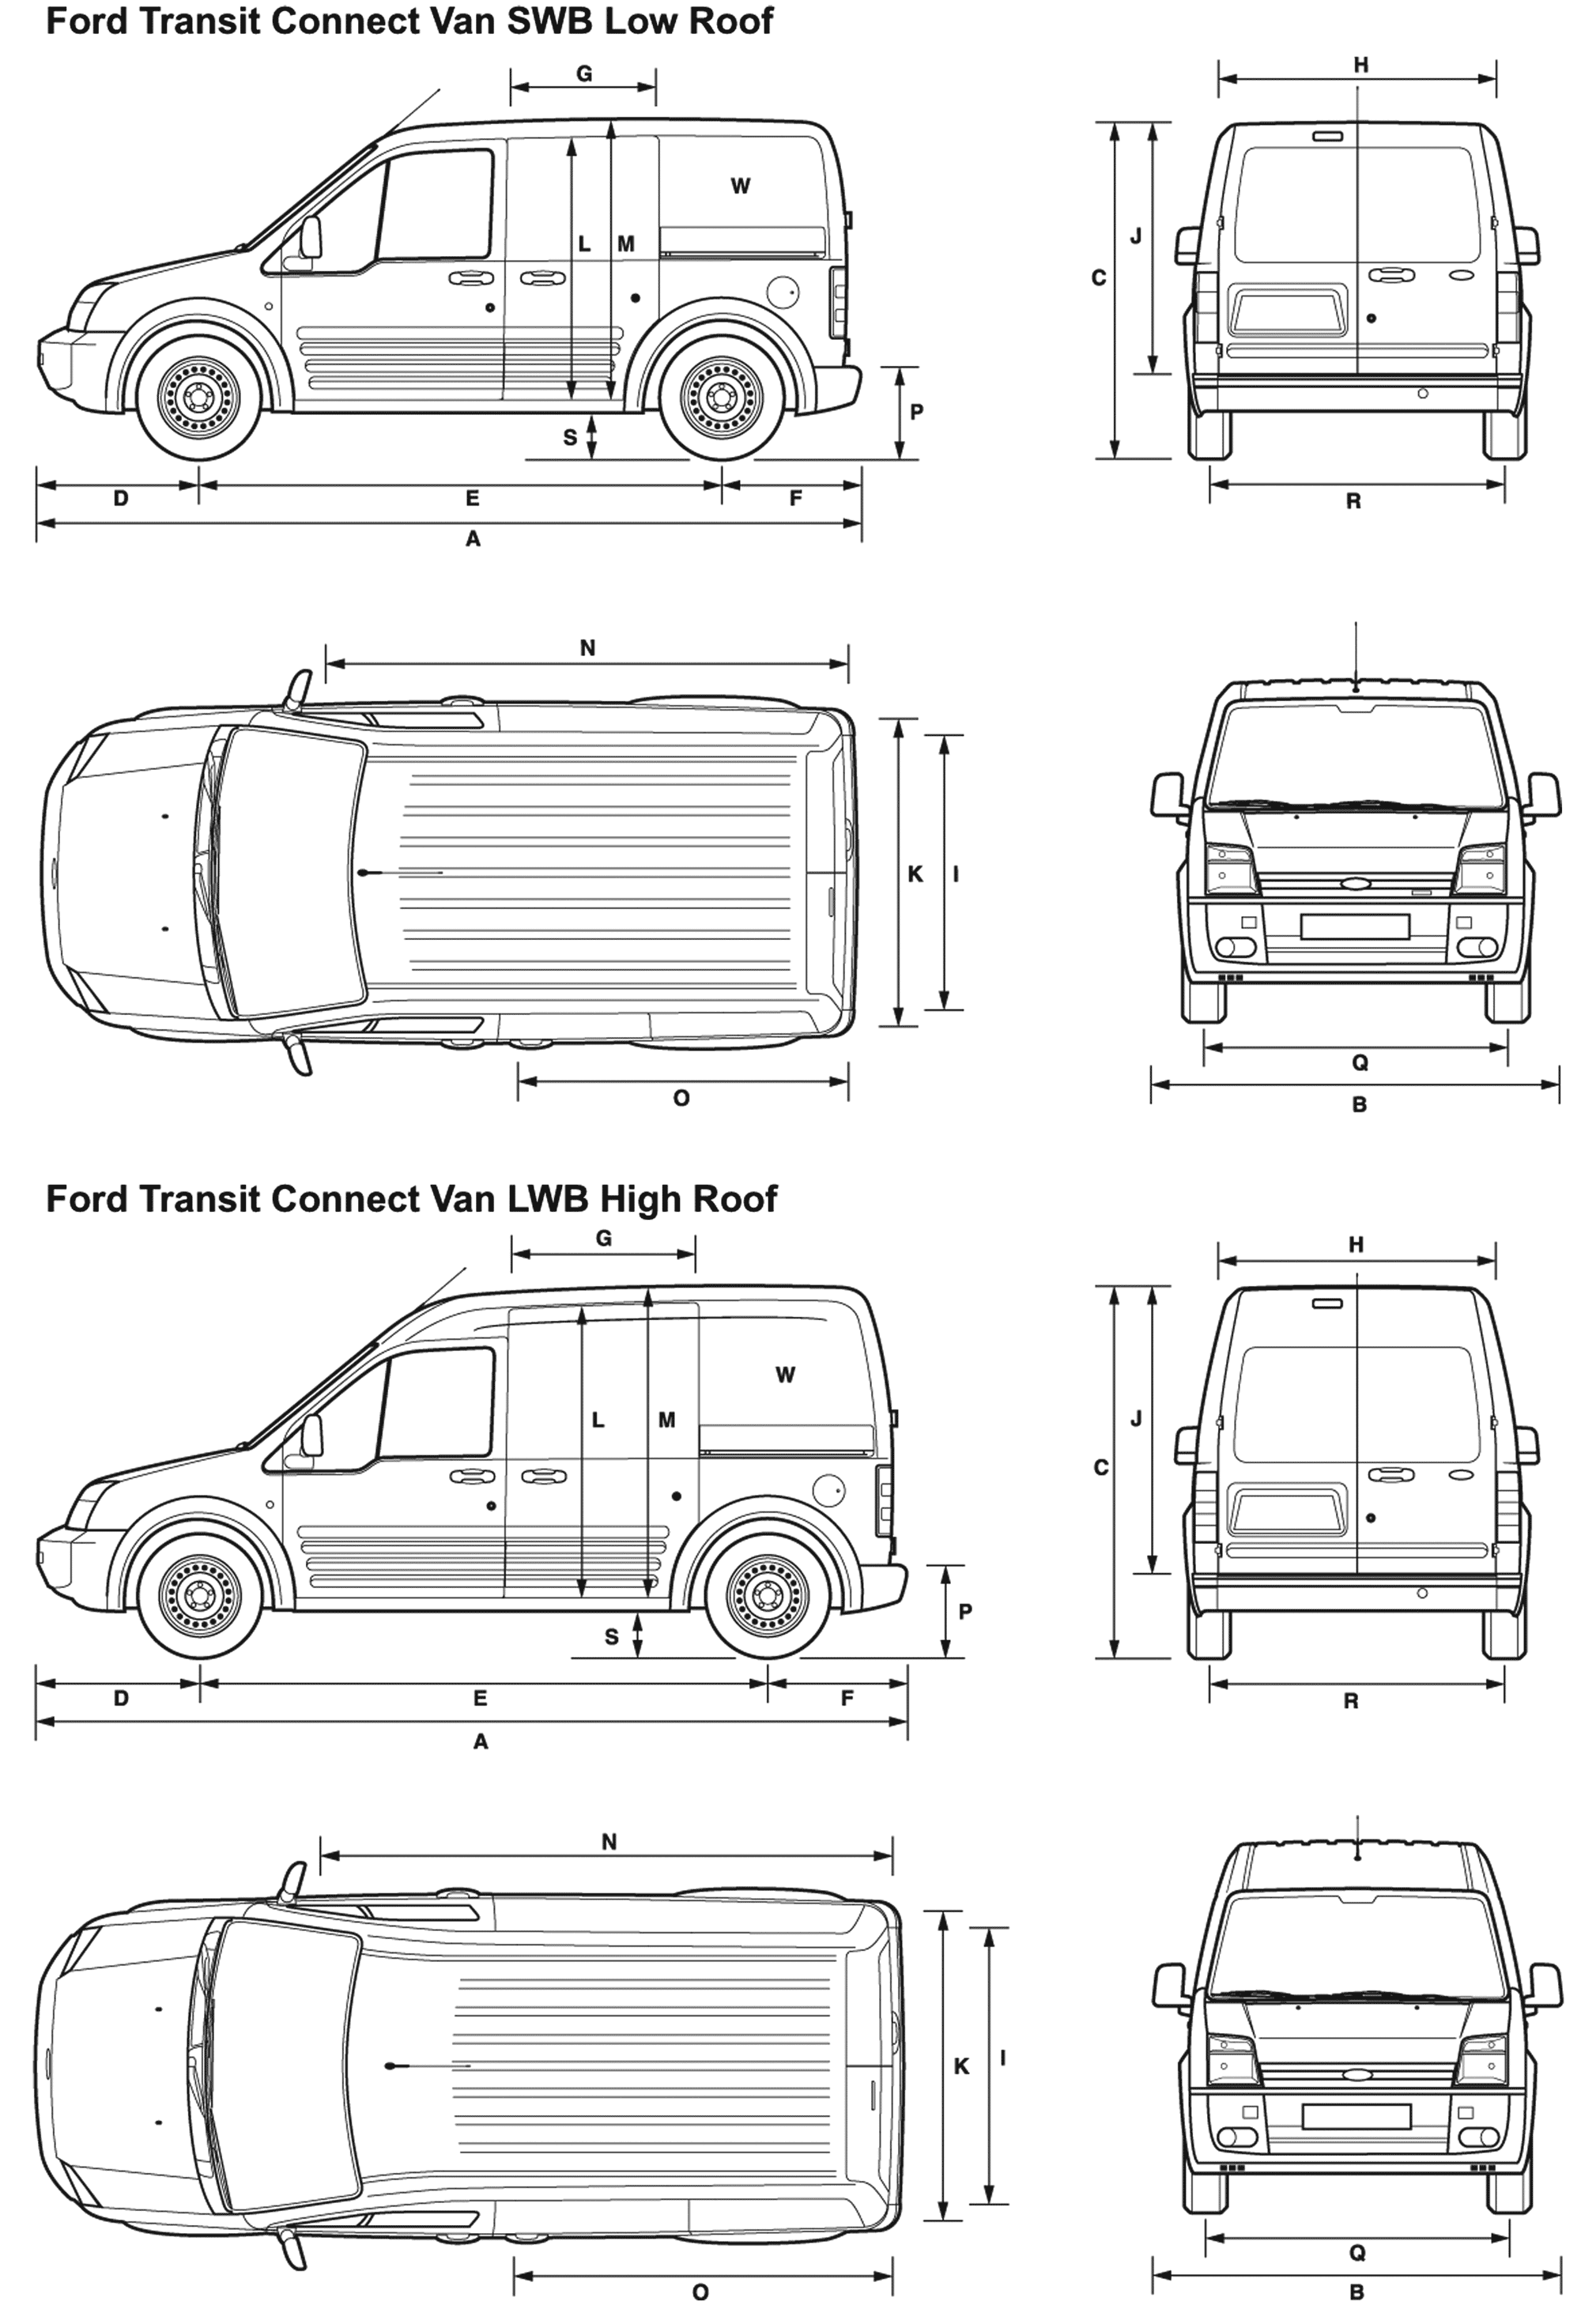 Ford transit van blueprints